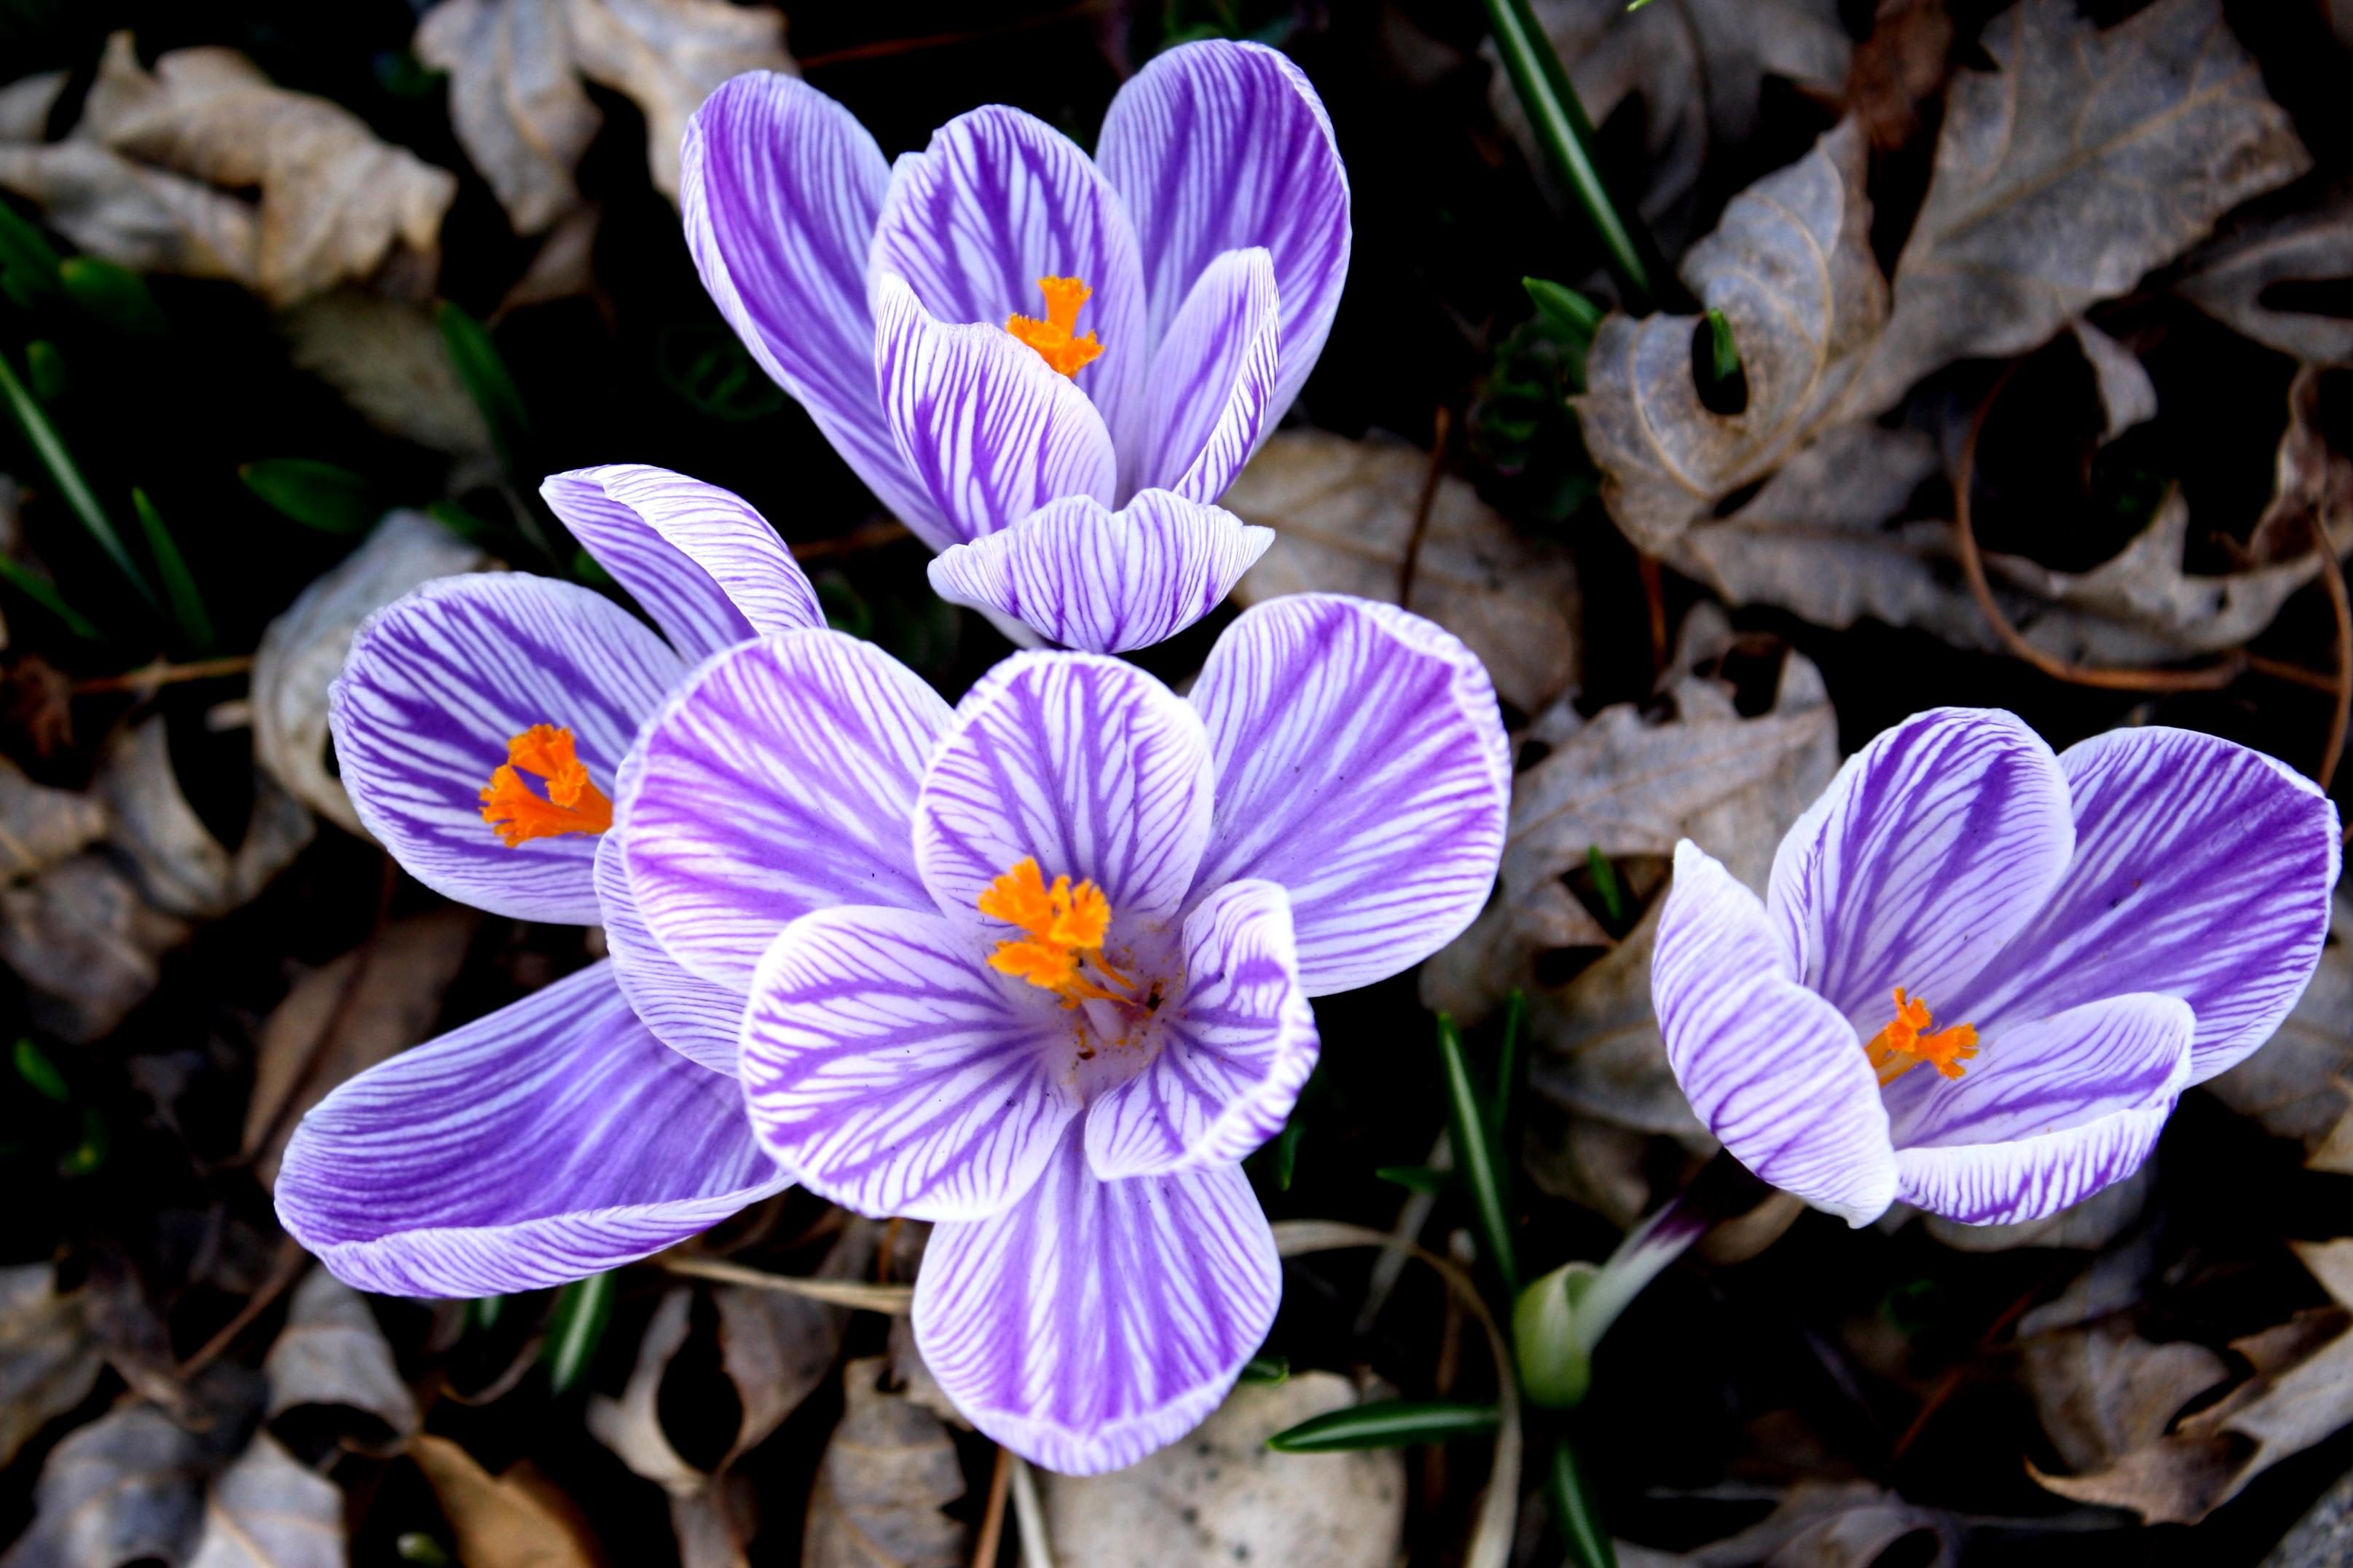 Free picture: crocus flower, purple, white, striped petals, pistil ...